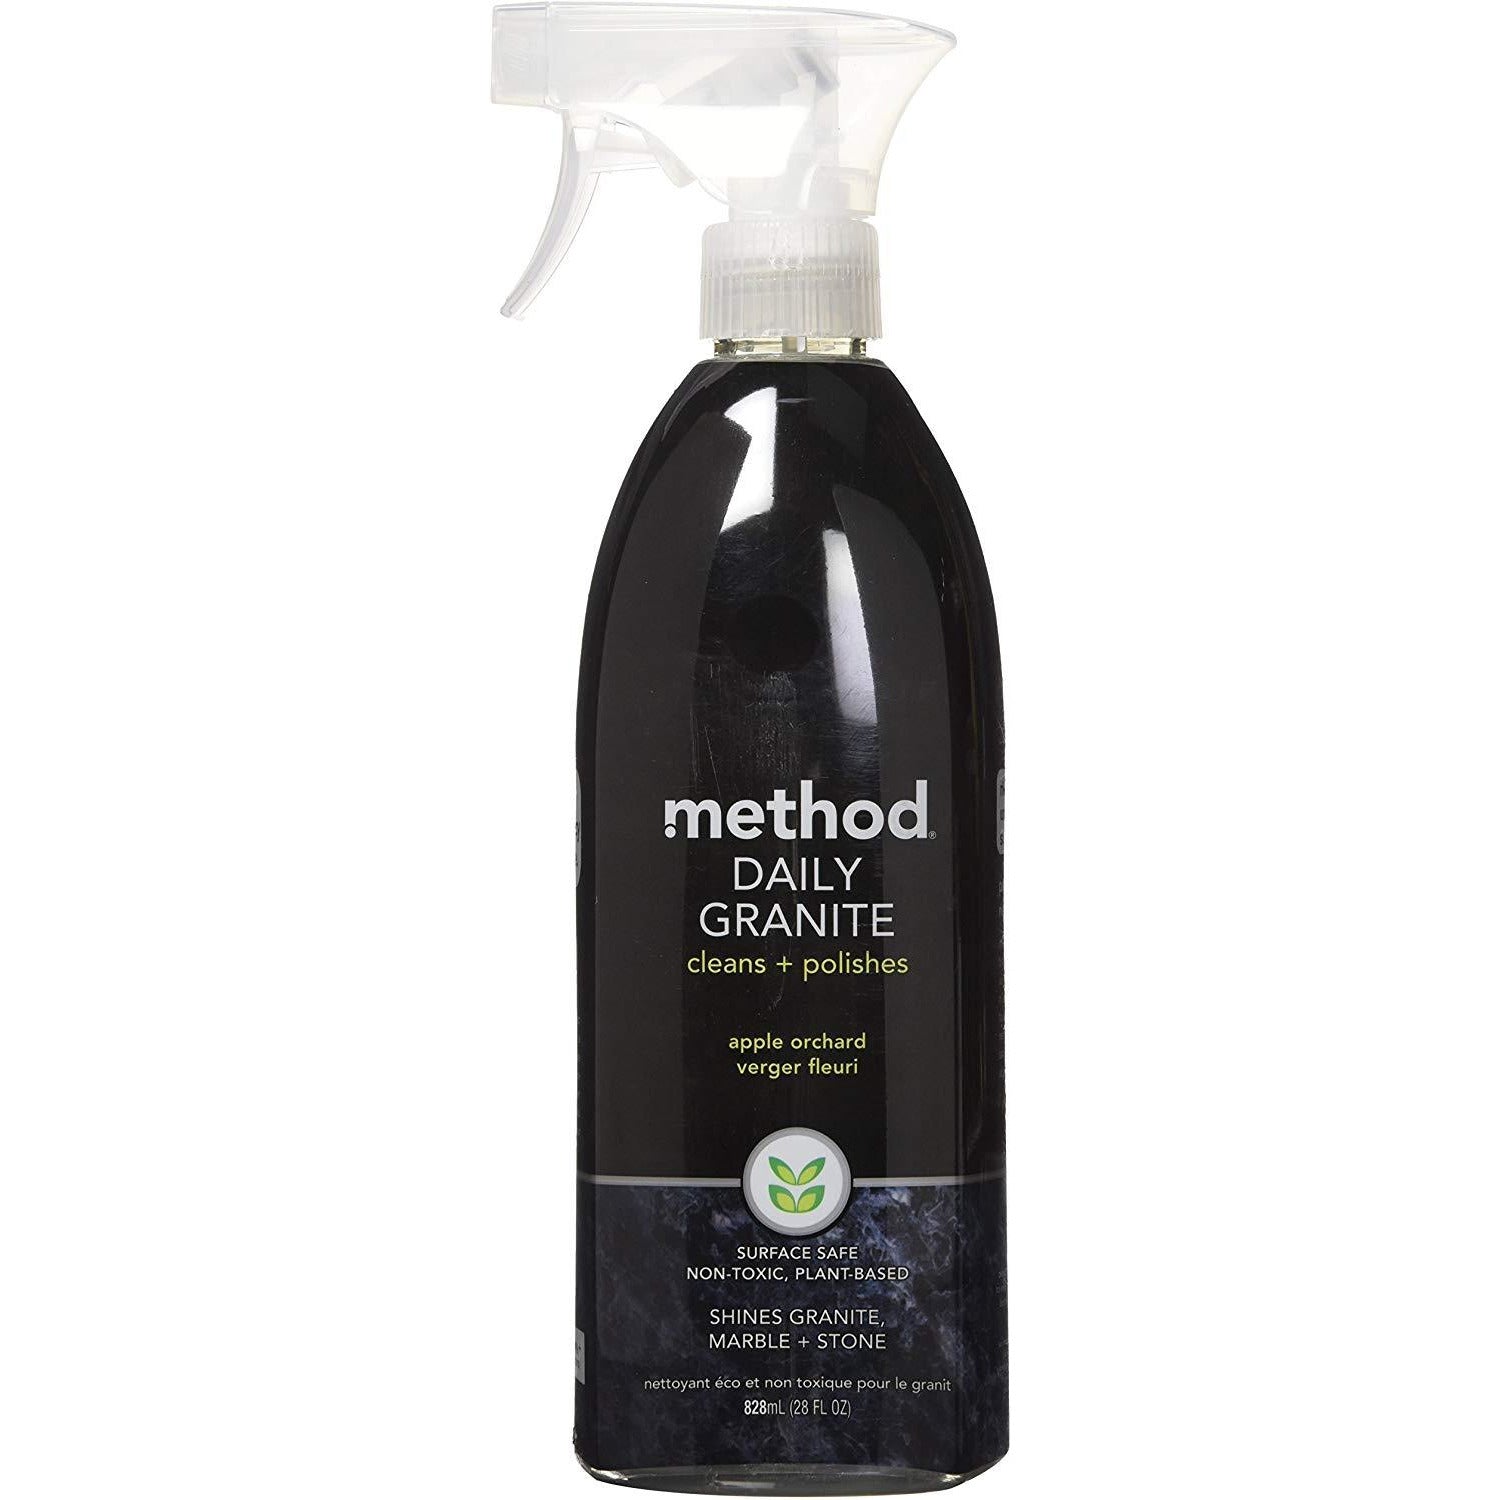 Method Daily Granite Cleaner, 28 Oz